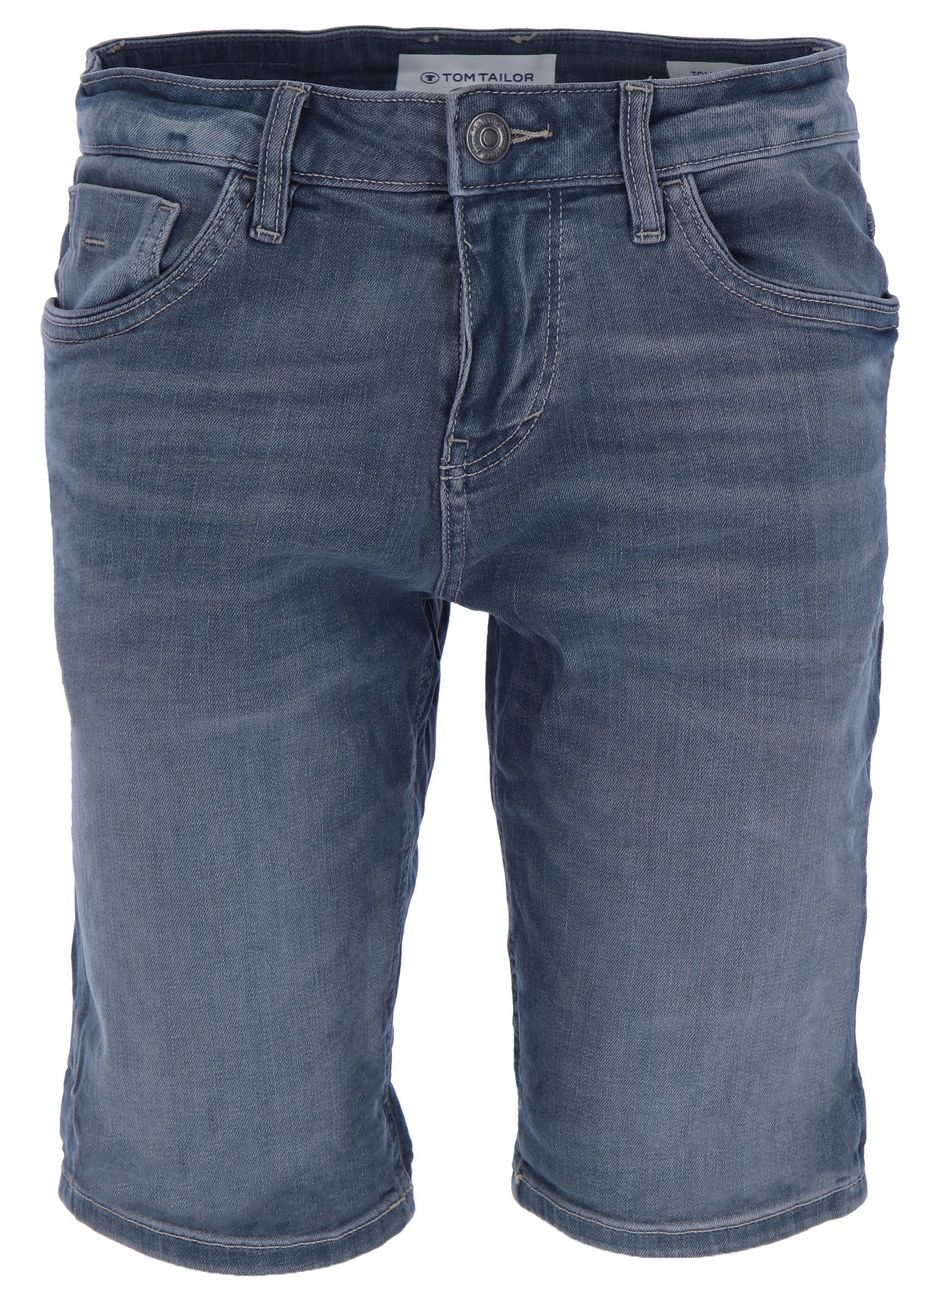 TOM TAILOR JOSH SHORTS Herren Jeans Shorts Josh Regular